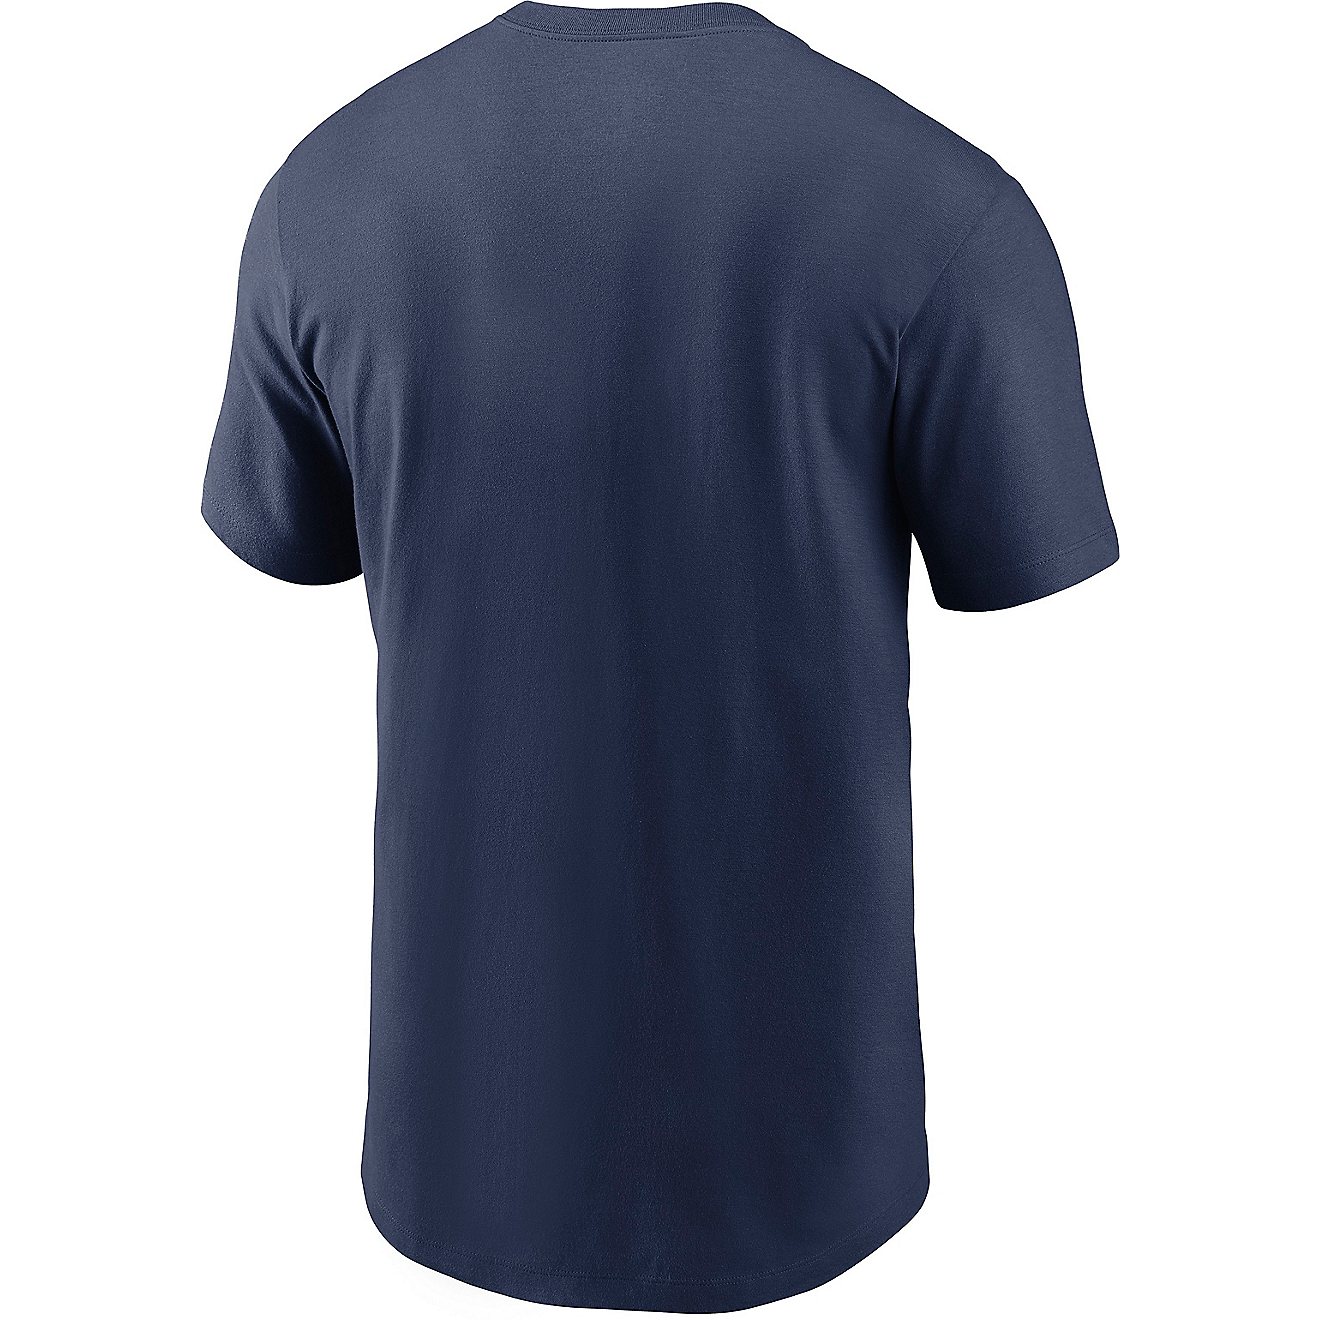 Nike Men's Atlanta Braves Team City T-shirt                                                                                      - view number 2